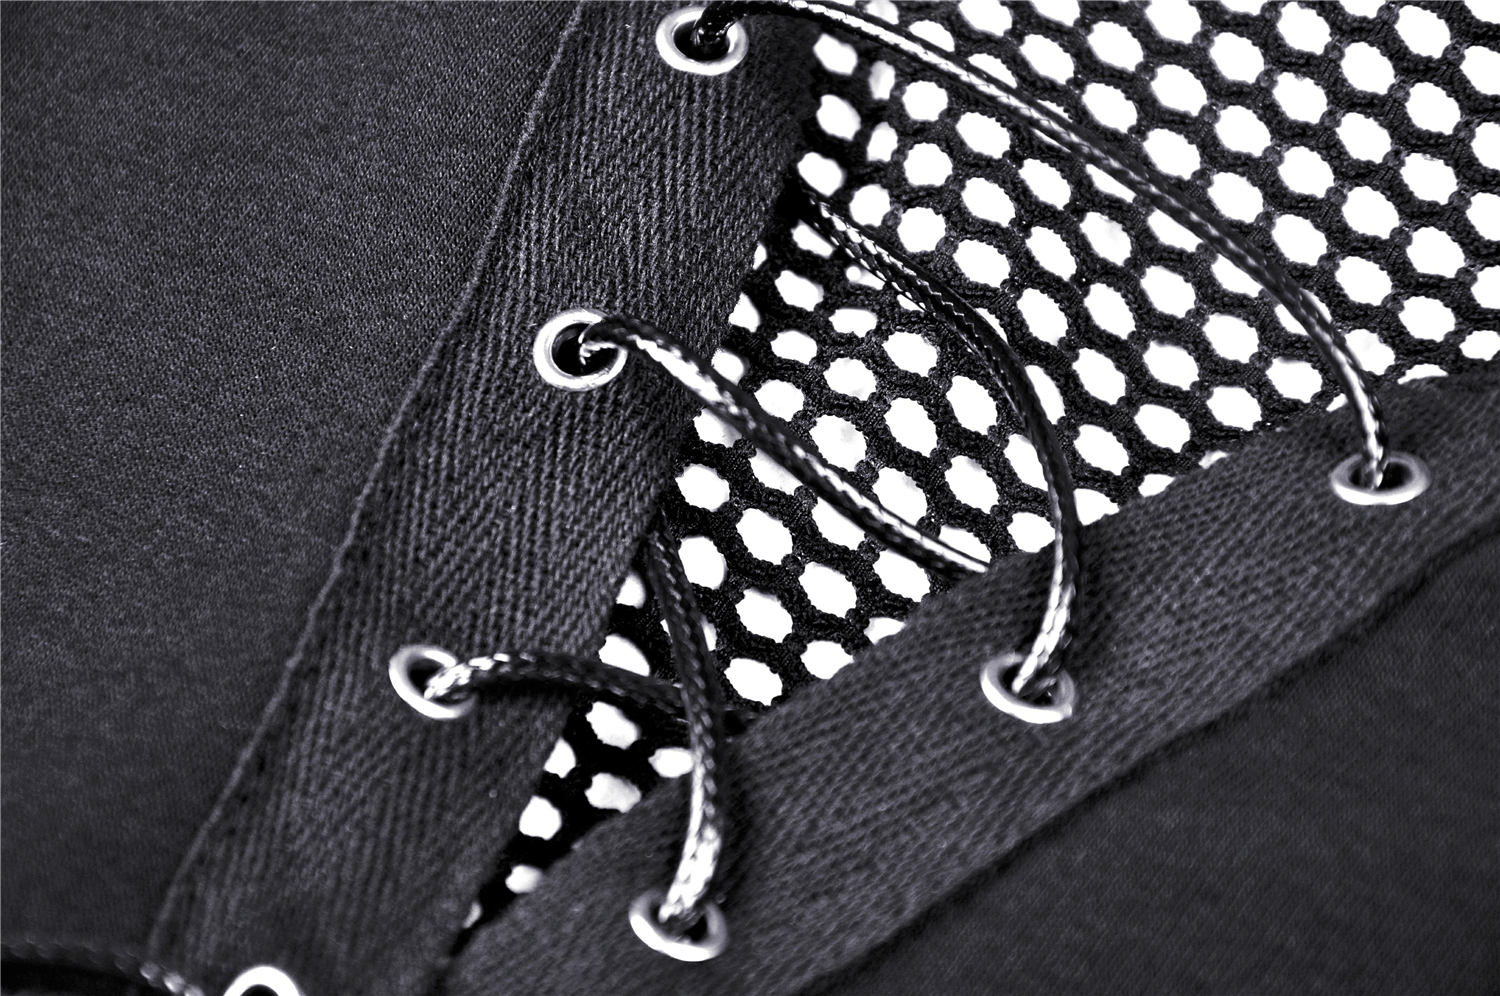 Stylish Black Mesh Crop Top with Cold Shoulder Design